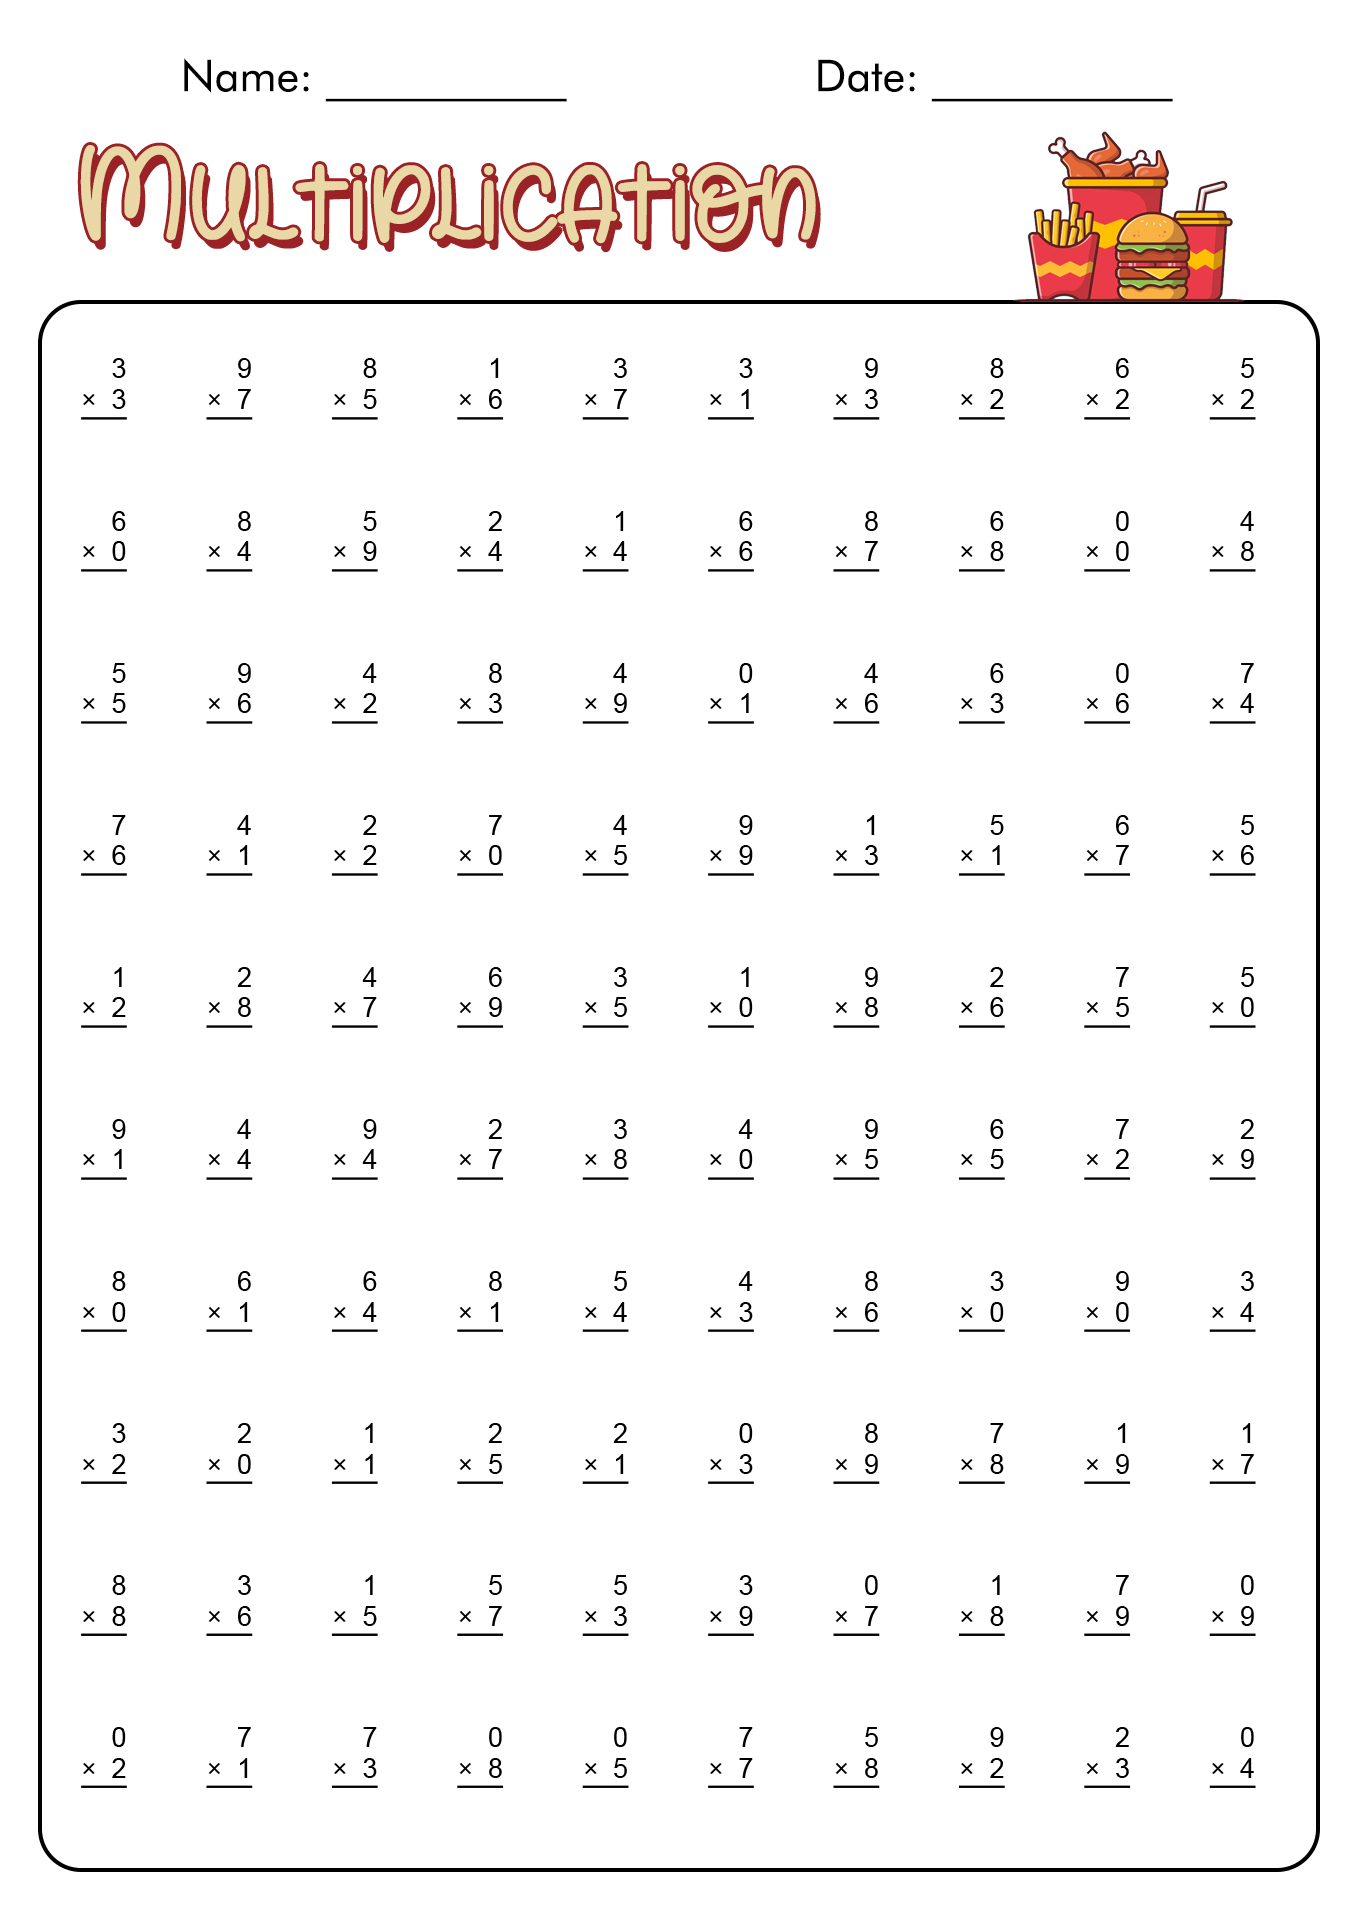 11 Images of Multiplication Worksheets For 3rd Grade